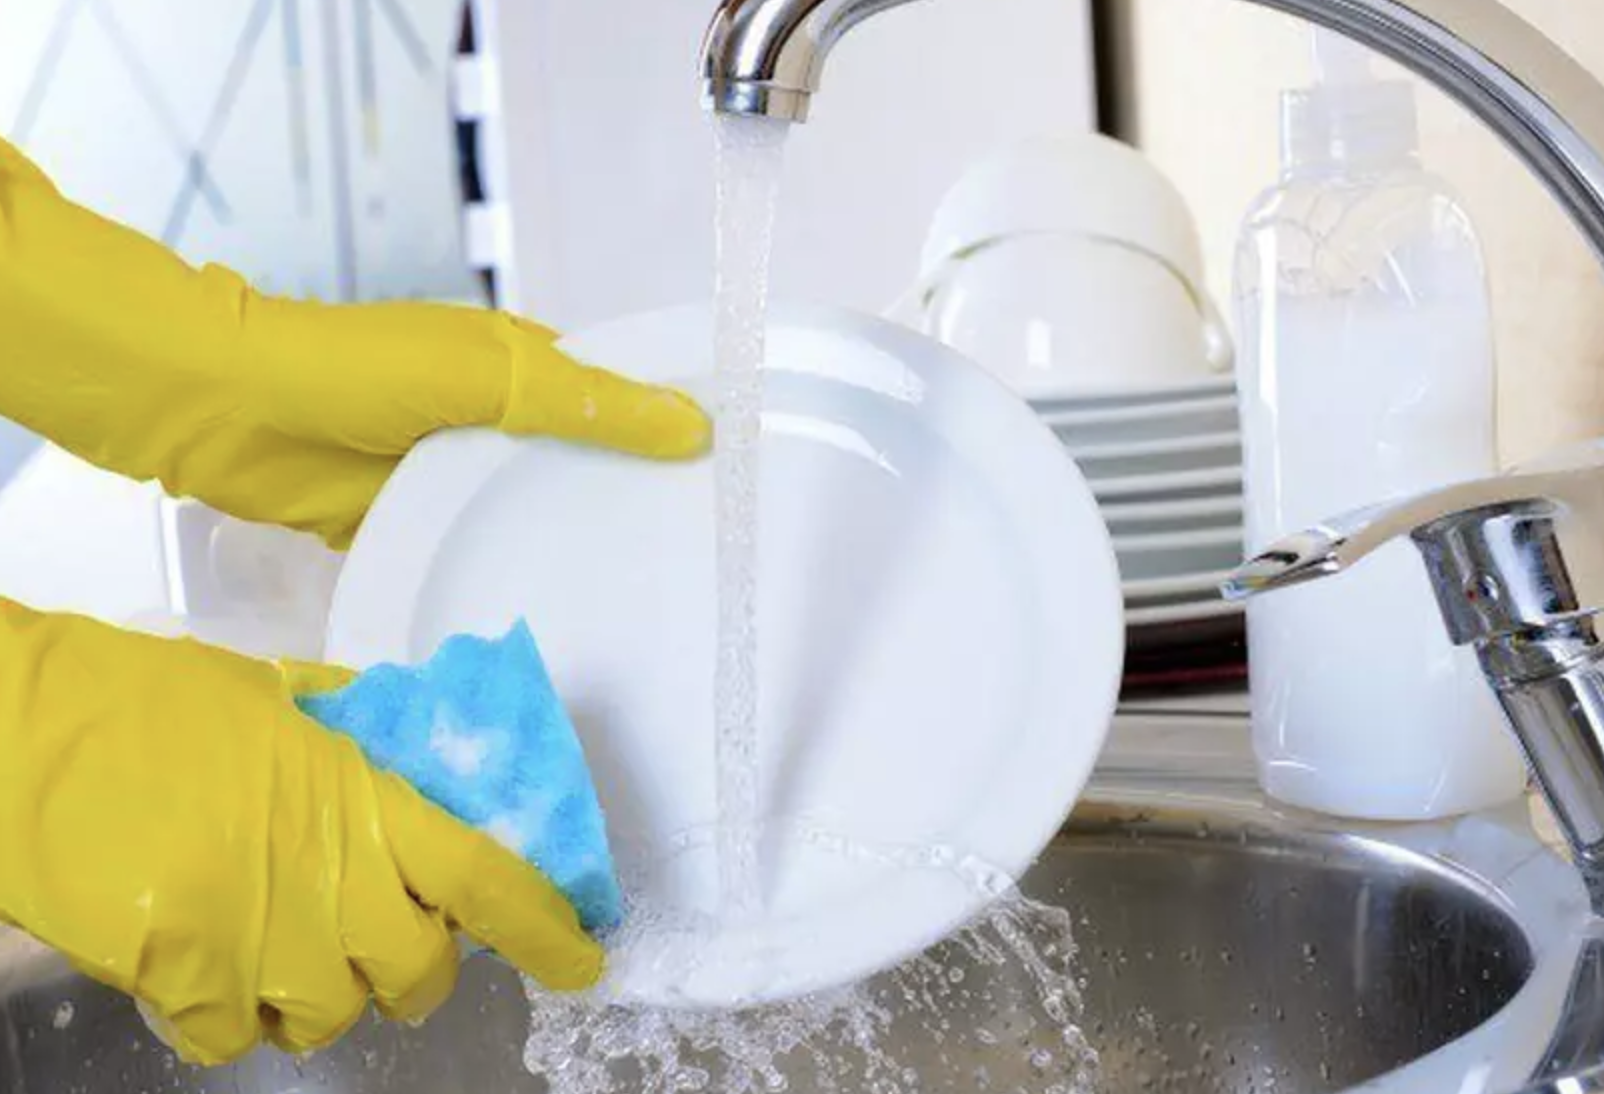 Hidden Toxins in Dish Soap